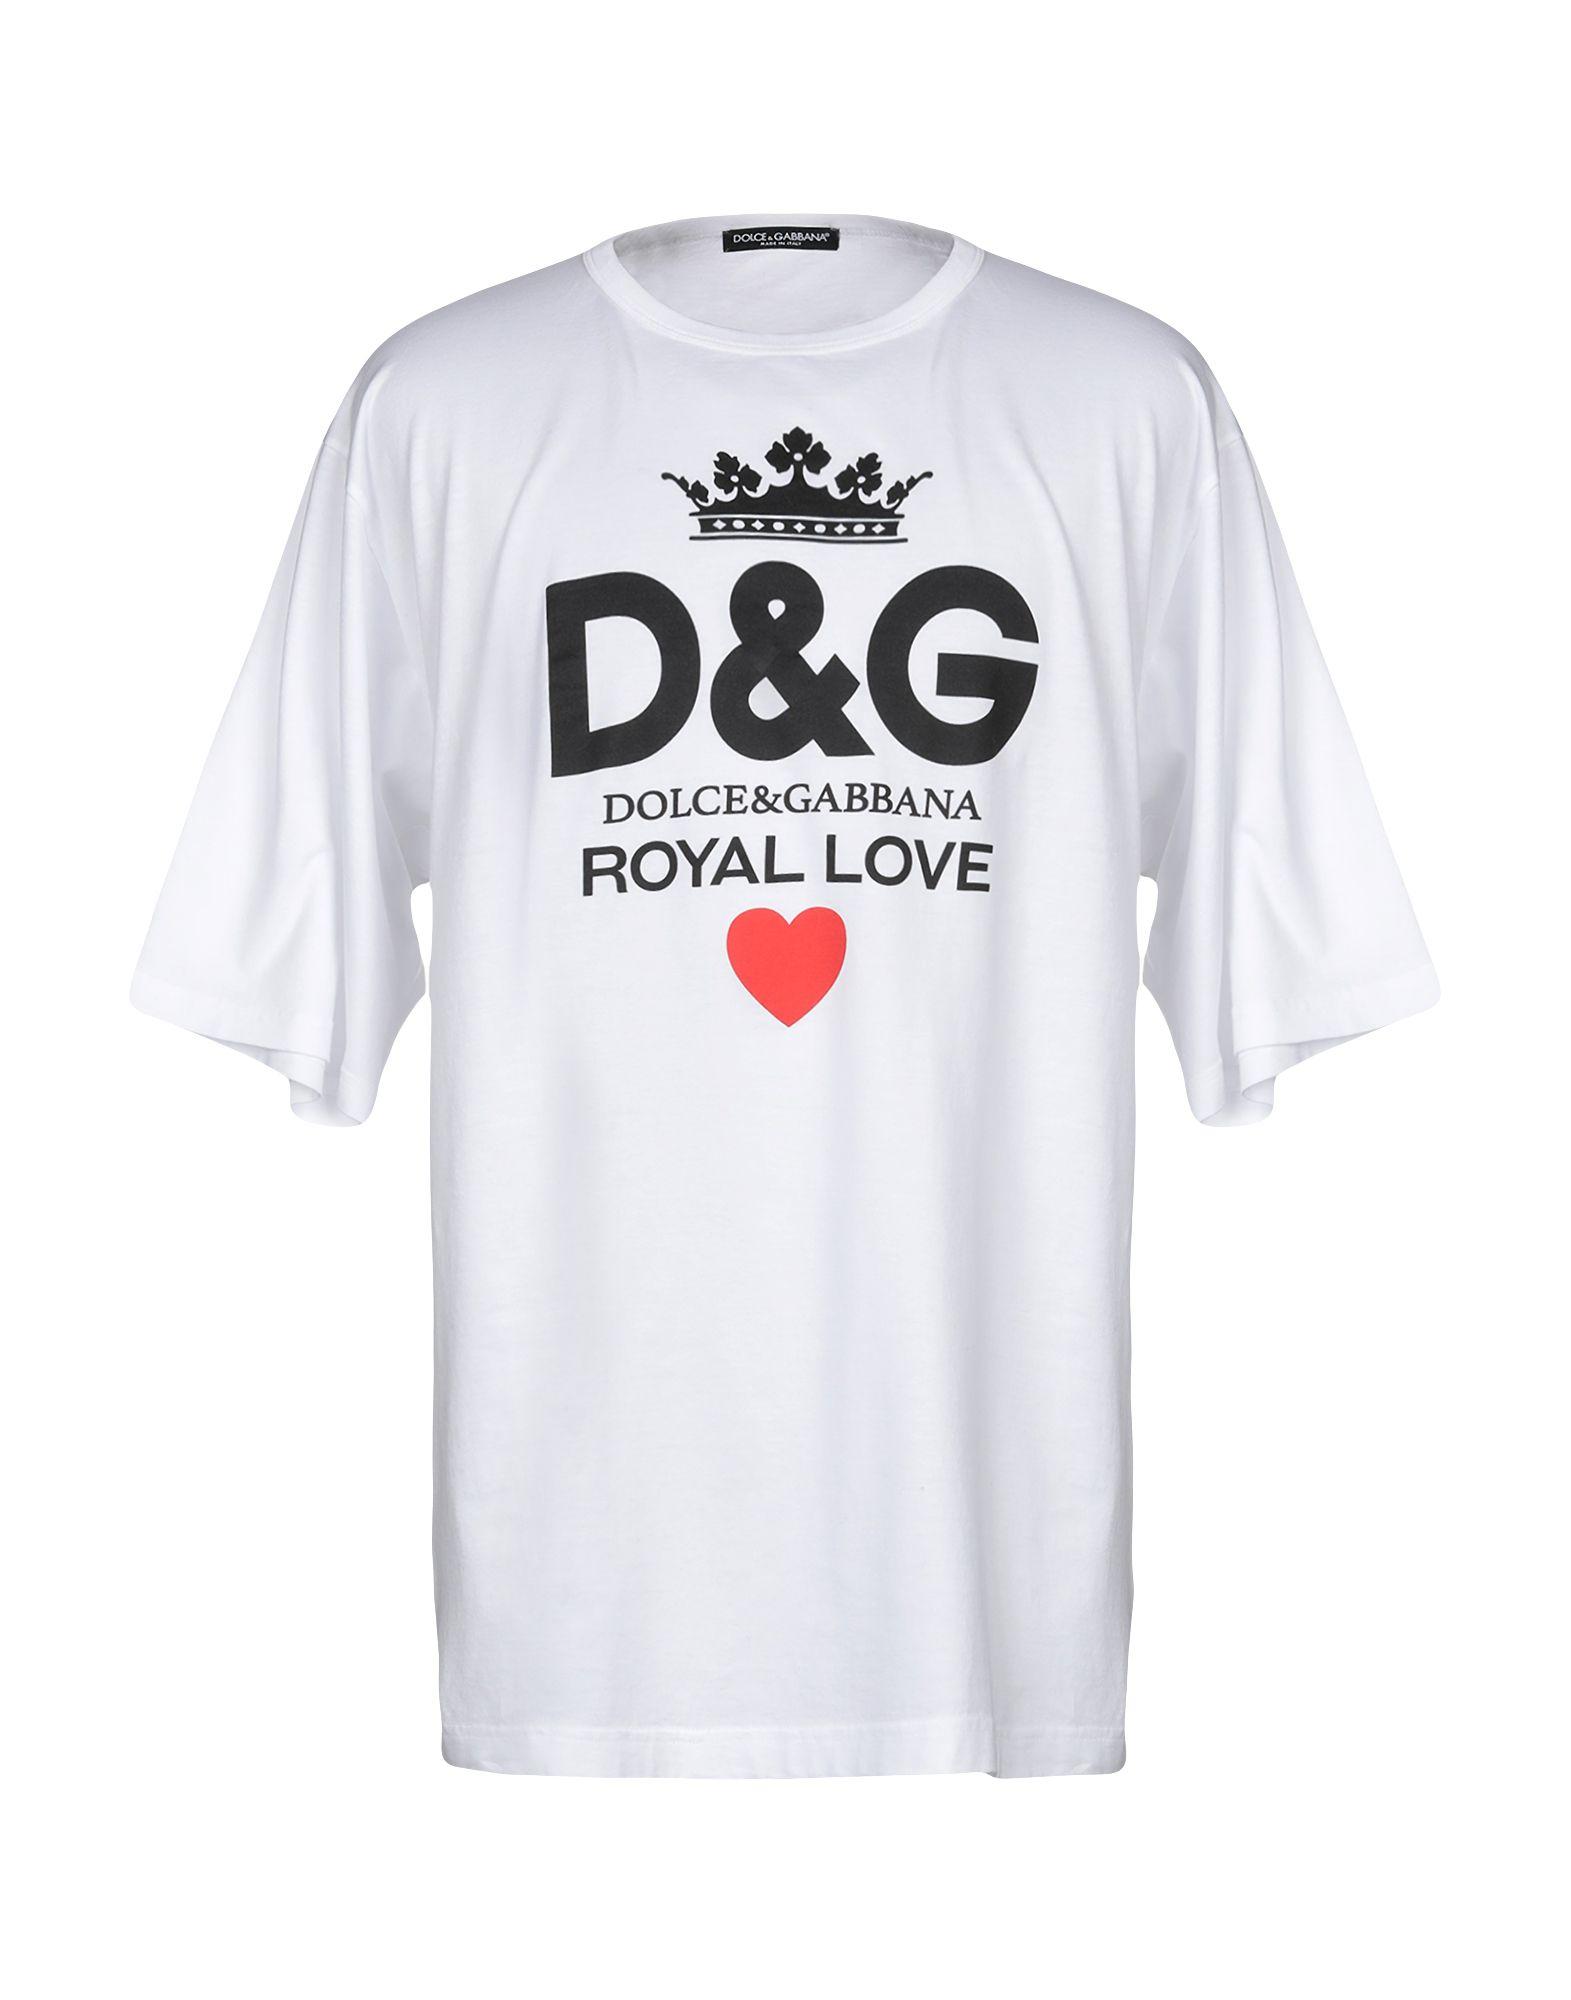 Dolce & Gabbana Cotton T-shirt in White for Men - Lyst